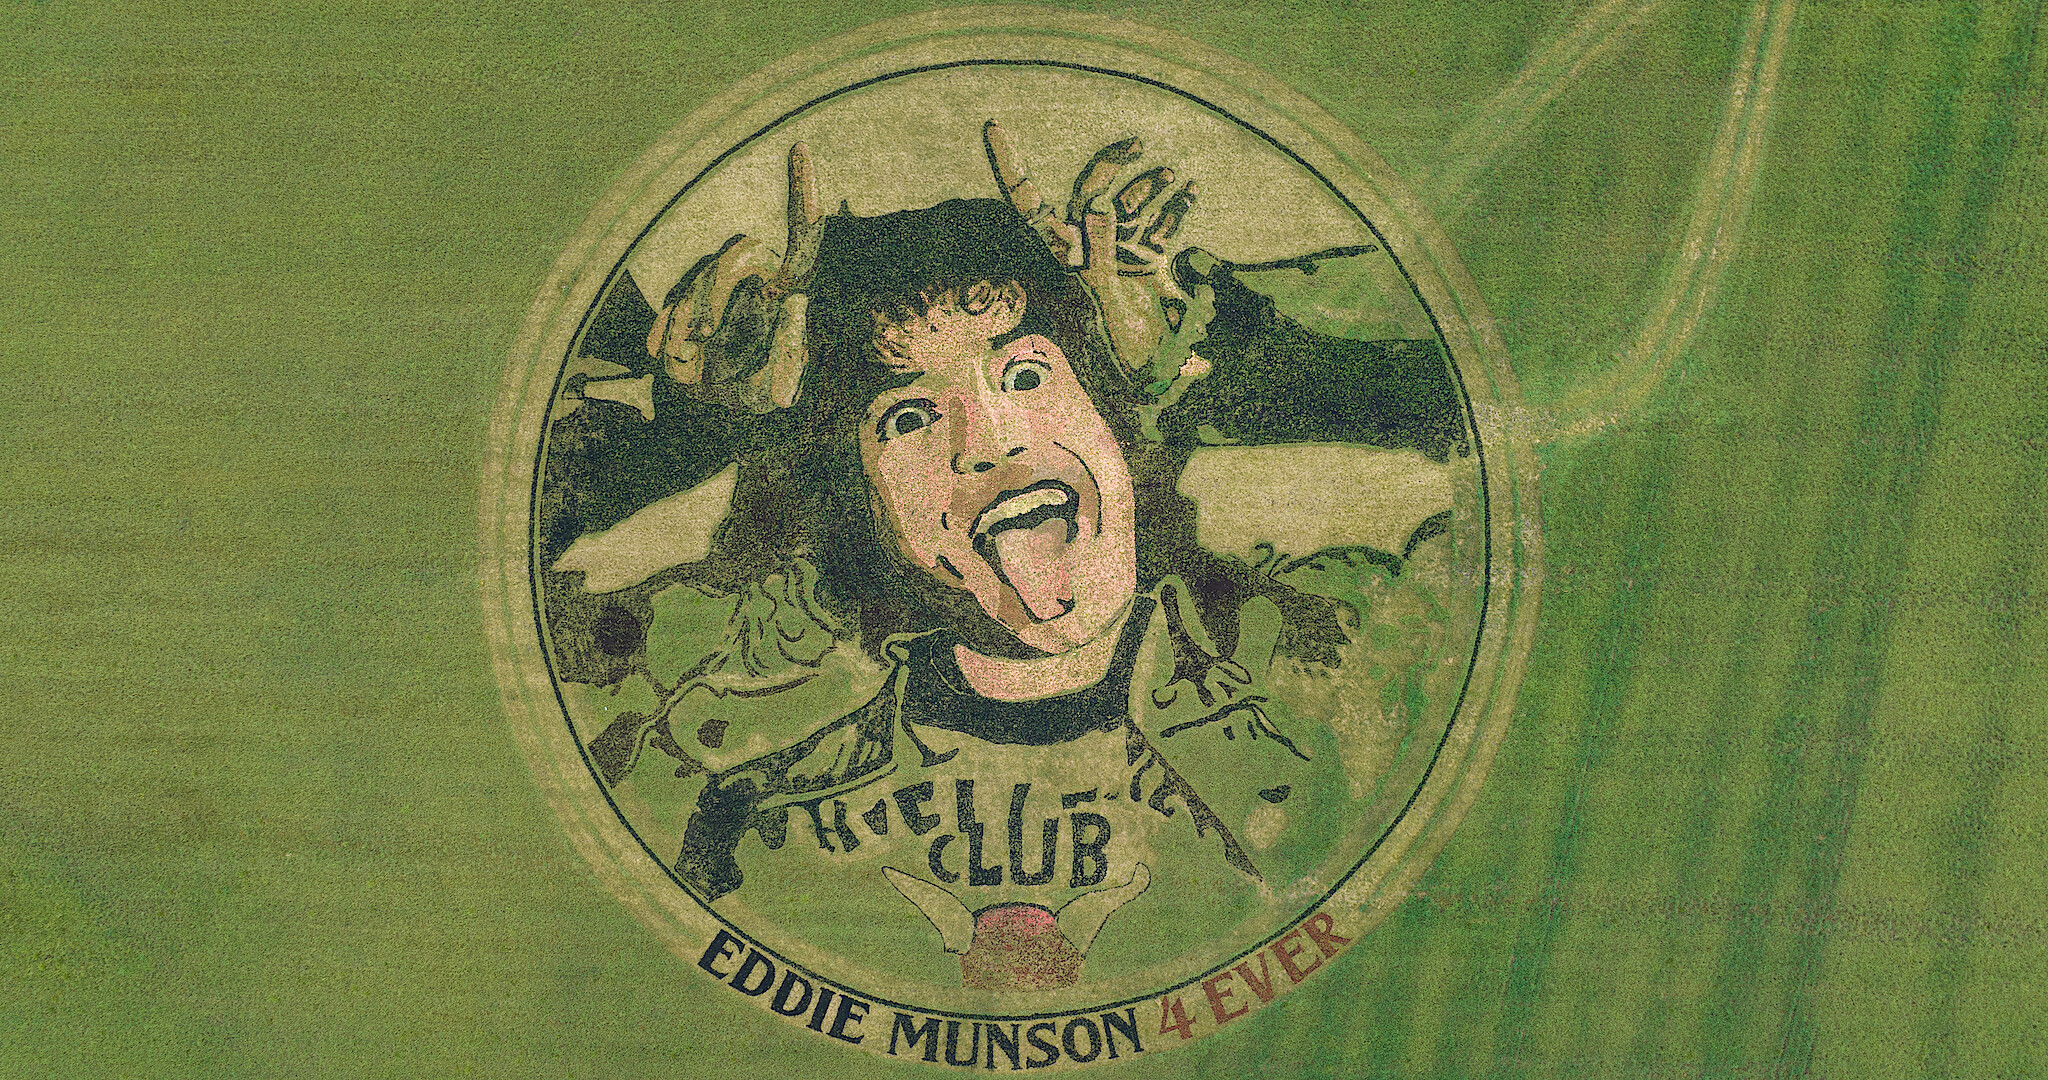 Eddie Munson Upside Down Guitar Solo, Stranger Things 4 Vol 2 clip, Stranger  Things, solo